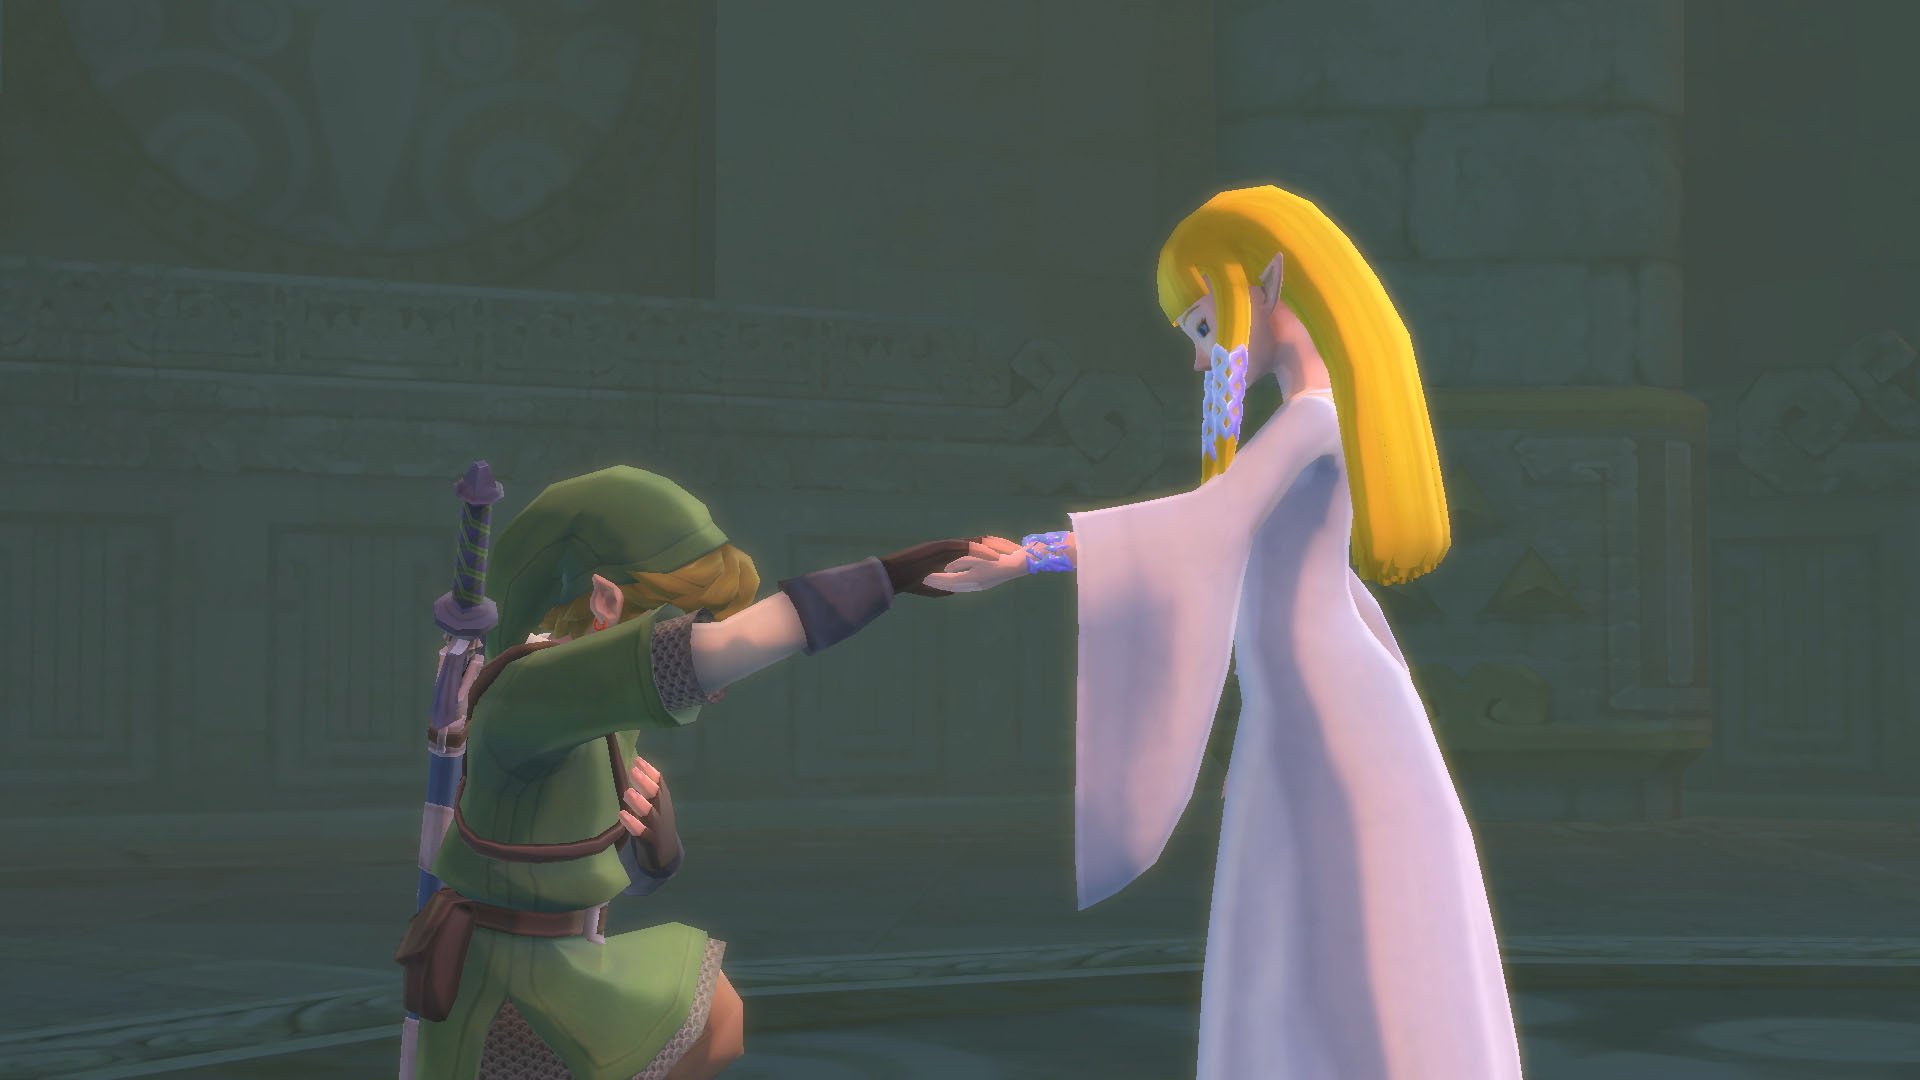 Zelda: Skyward Sword HD's credits confirm it was ported by Twilight Princess HD's developer